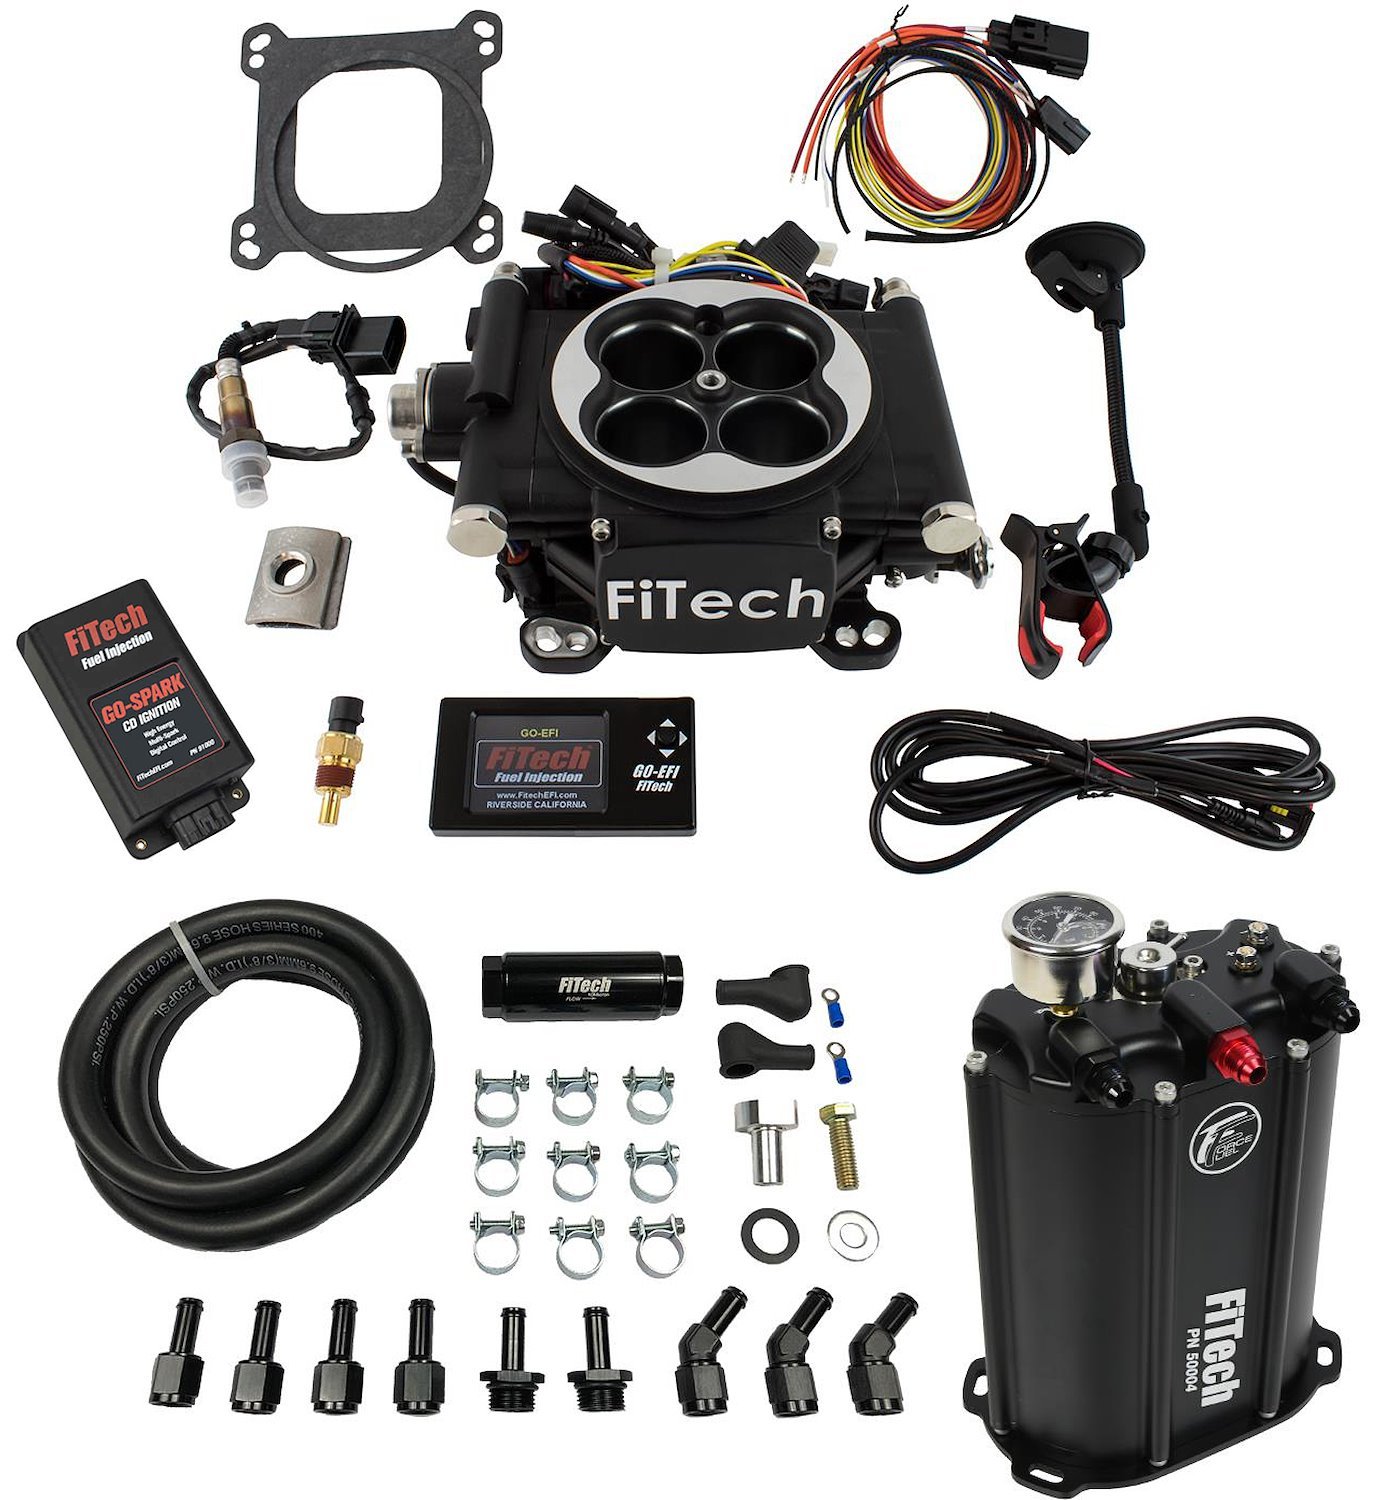 Go EFI-4 600 HP Throttle Body Fuel Injection